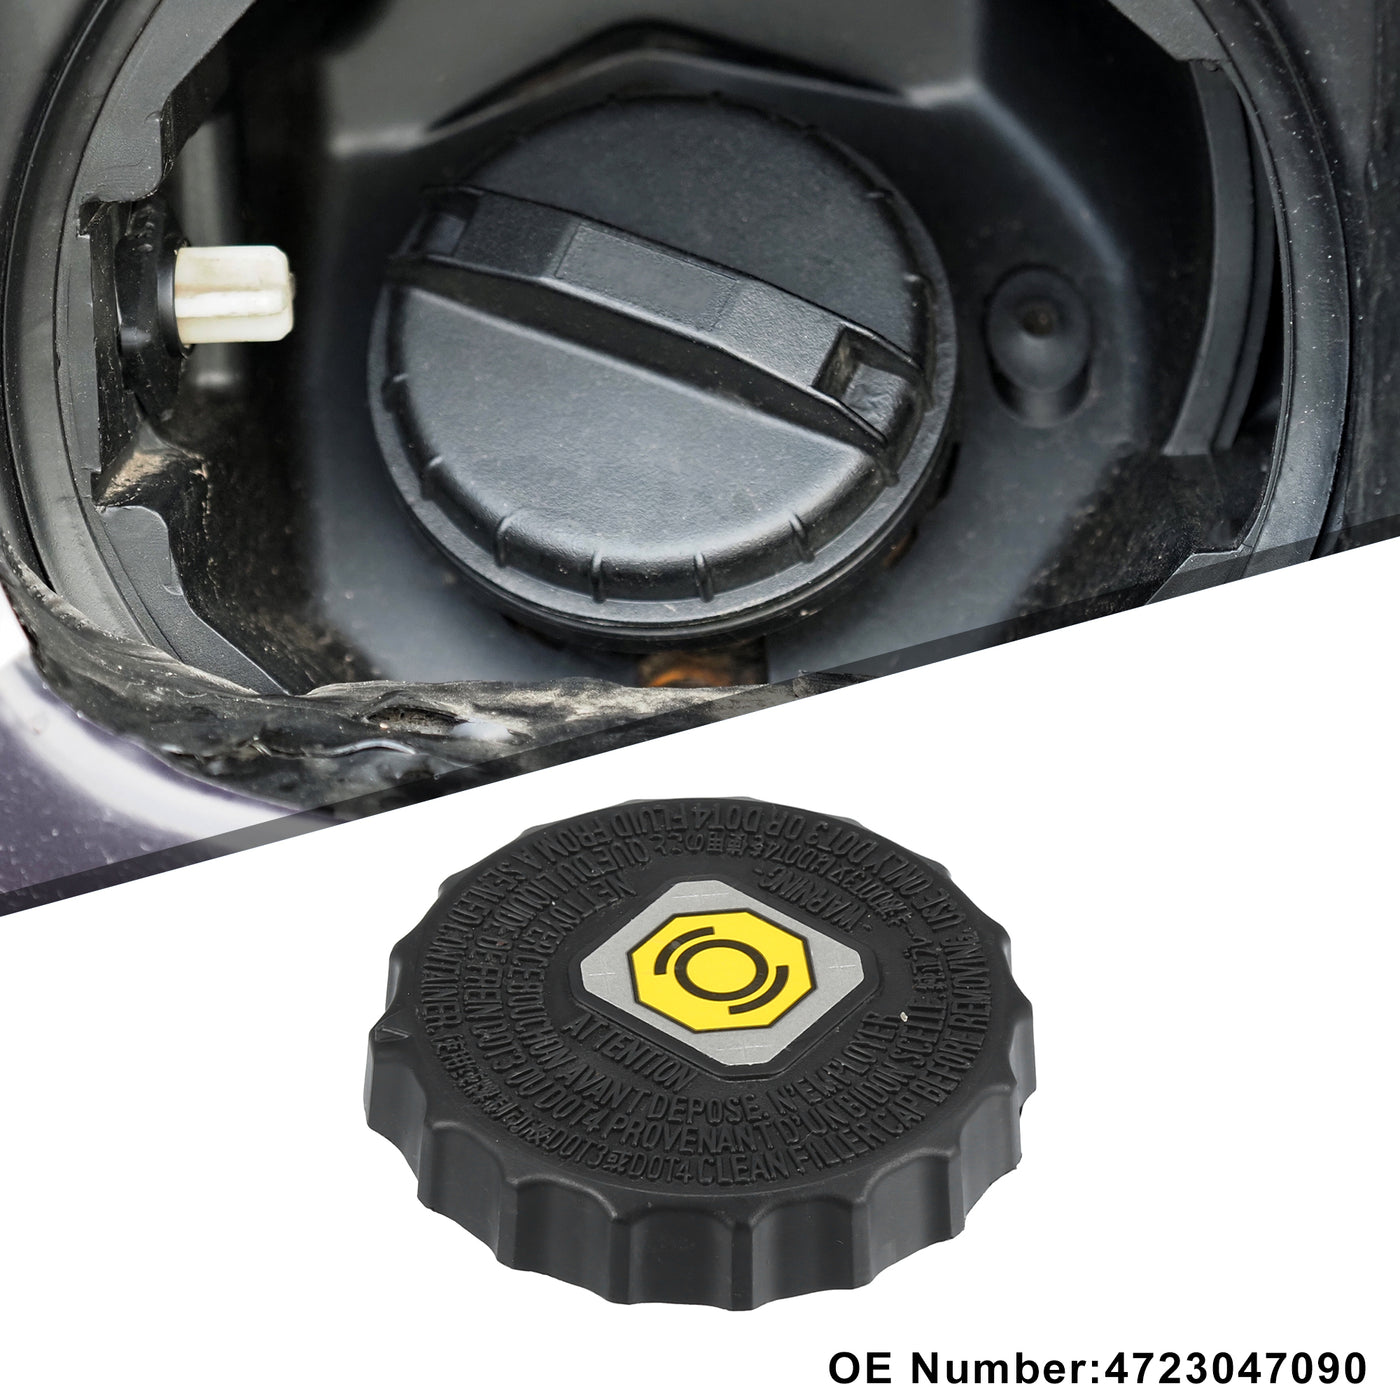 Motoforti Car Fuel Tank Filler Cover, Gas Tank Cap, for Lexus ES350 2019-2022, ABS, No.4723047090, Black